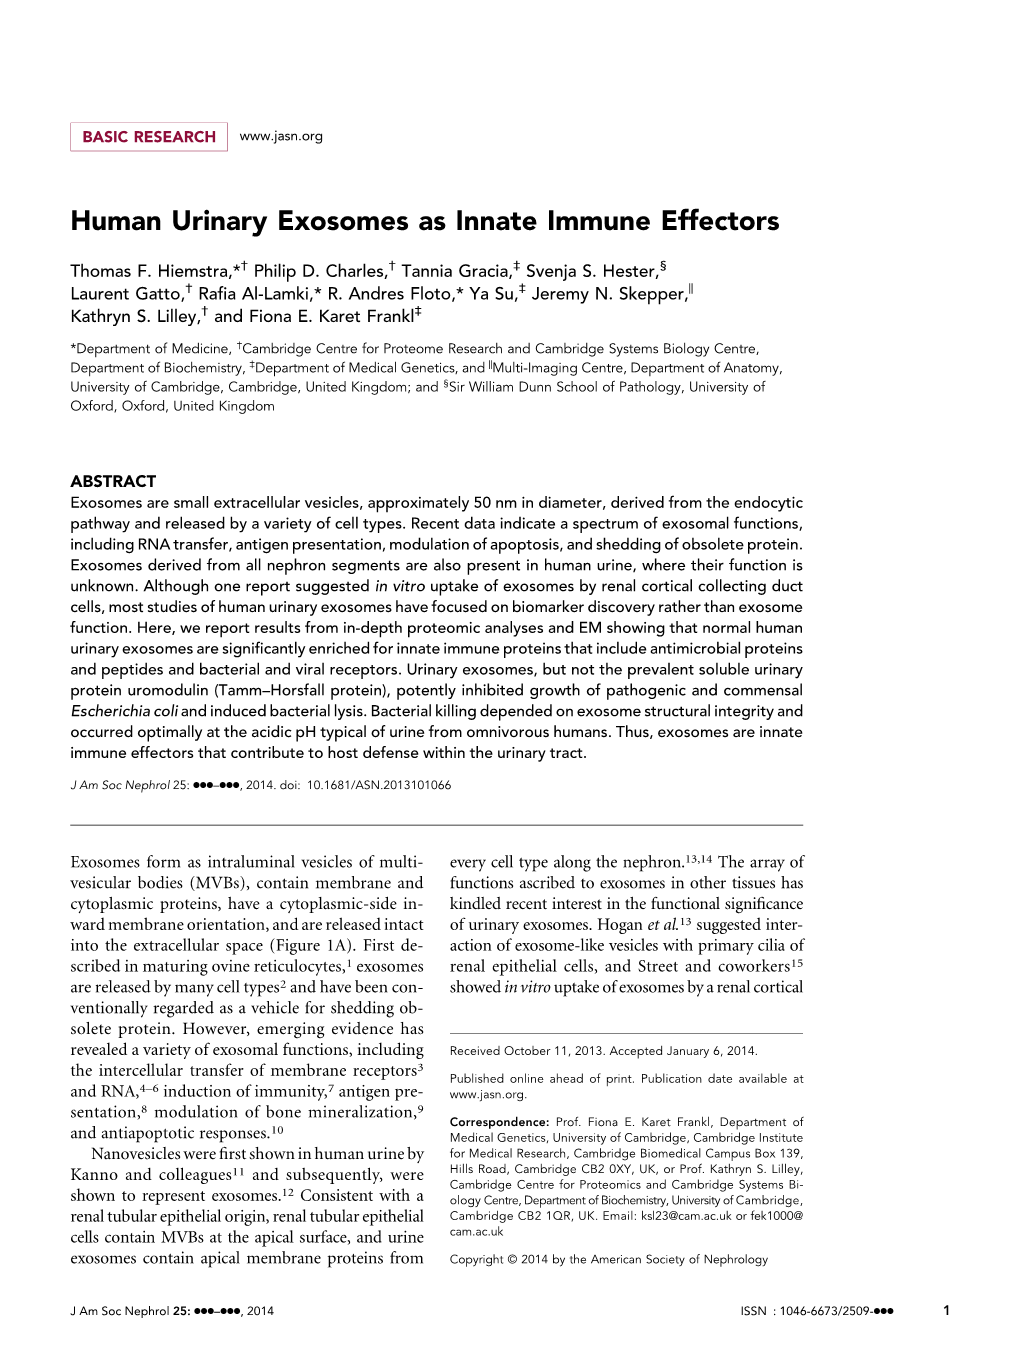 Human Urinary Exosomes As Innate Immune Effectors